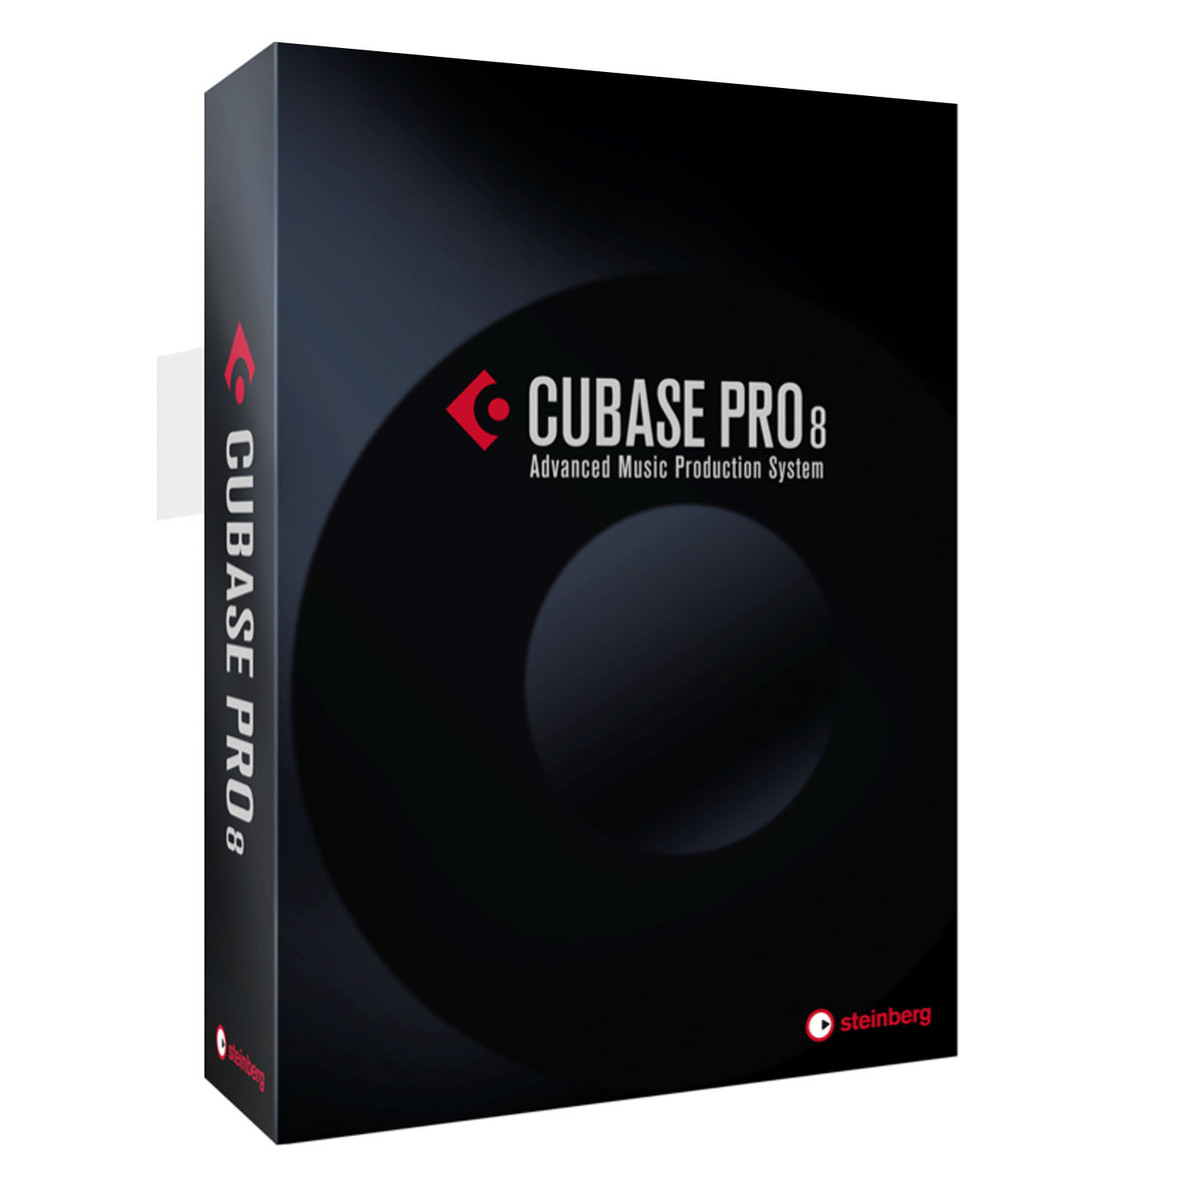 cubase pro 8 full version free download